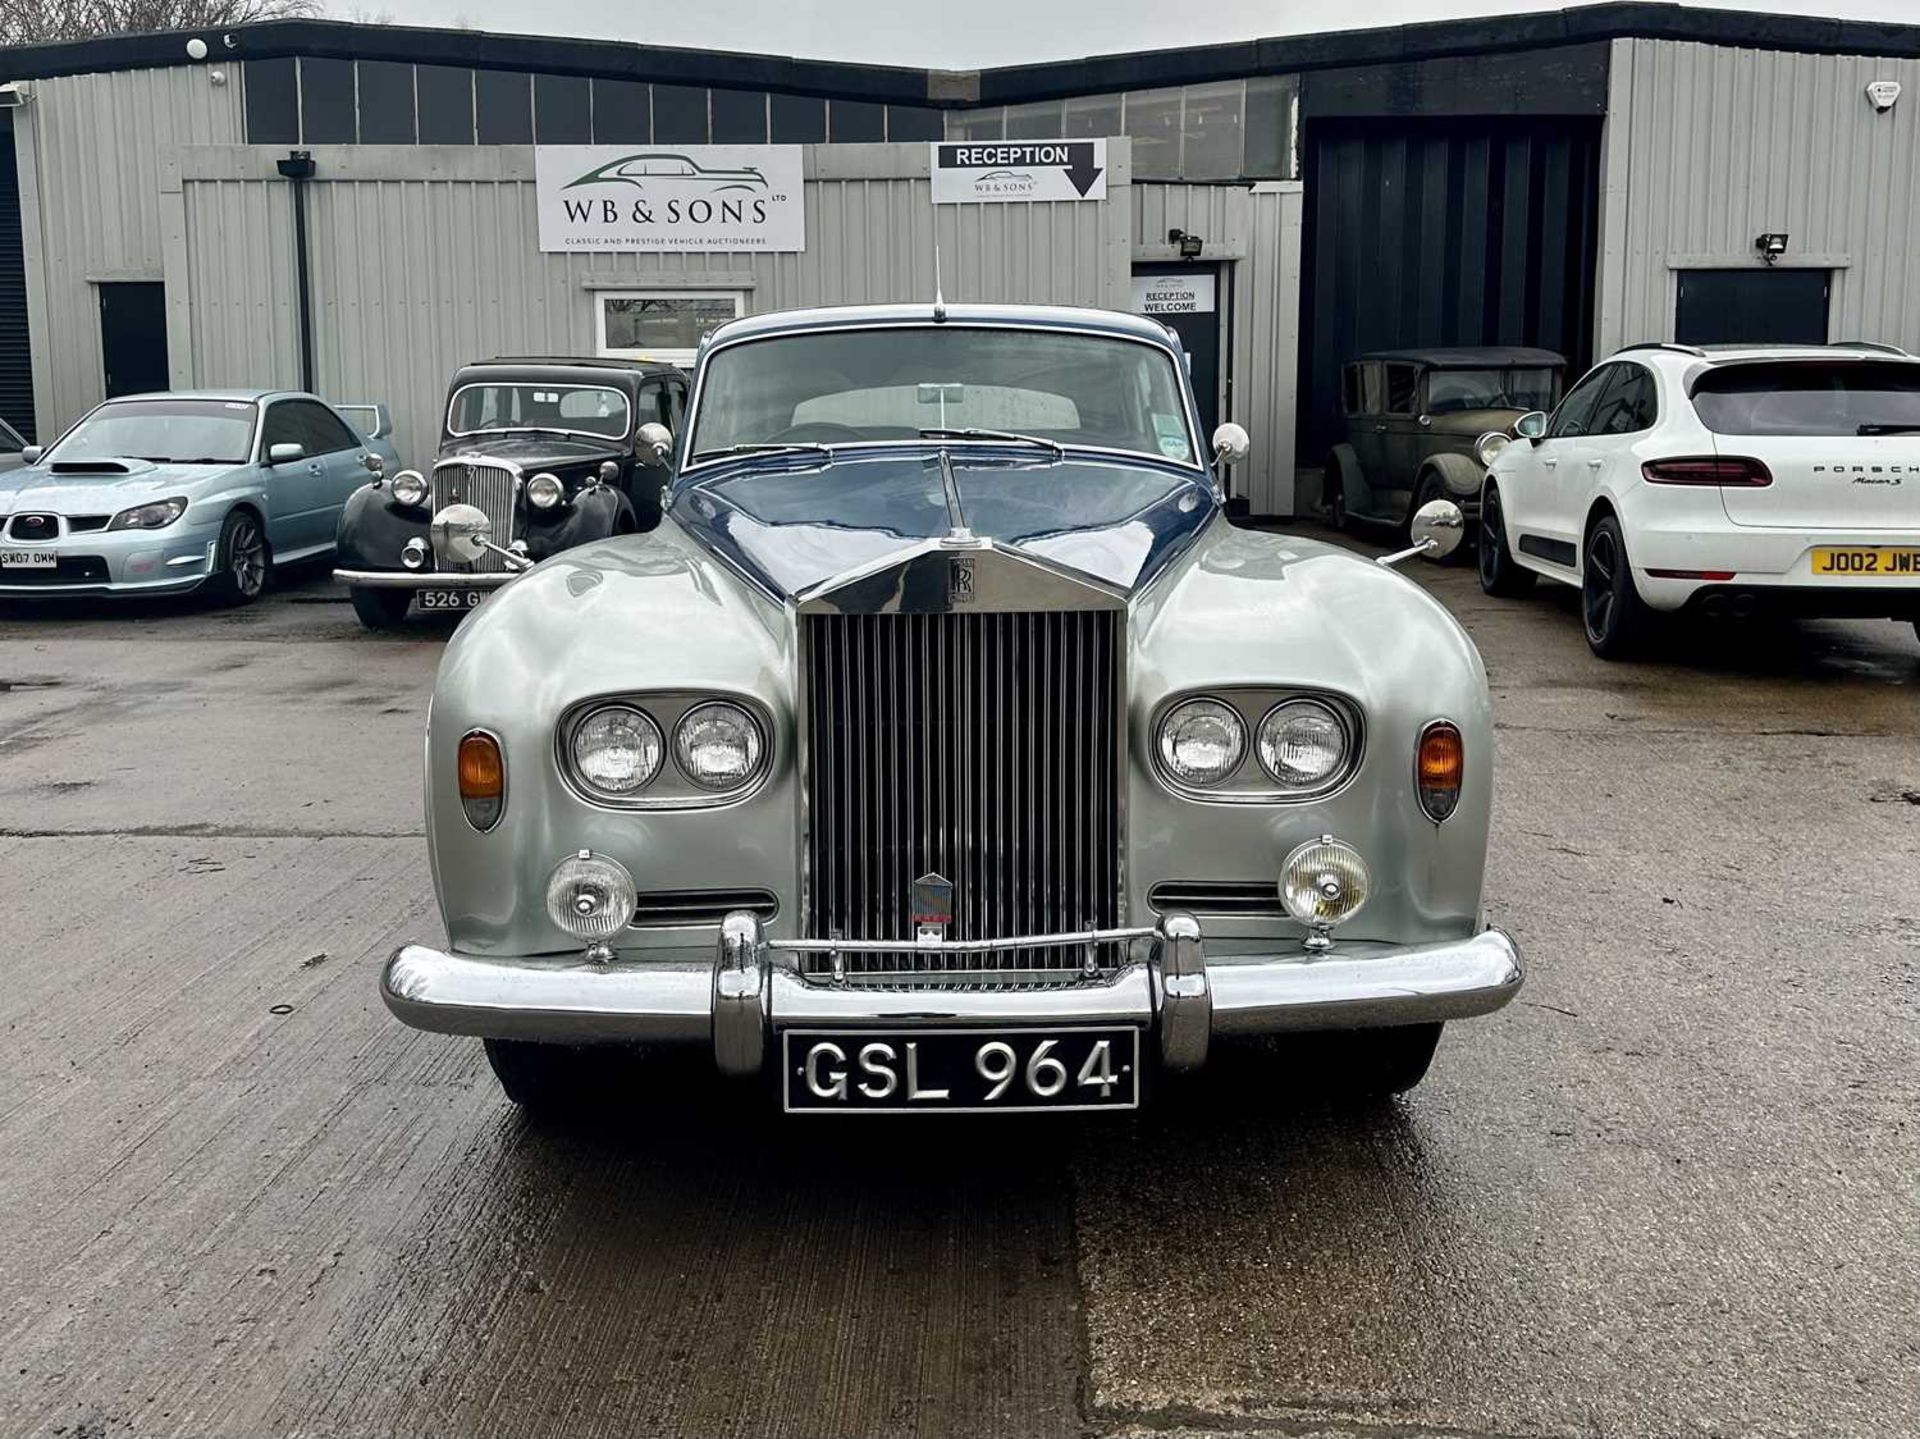 1963 Rolls Royce Silver Cloud III - Image 2 of 14